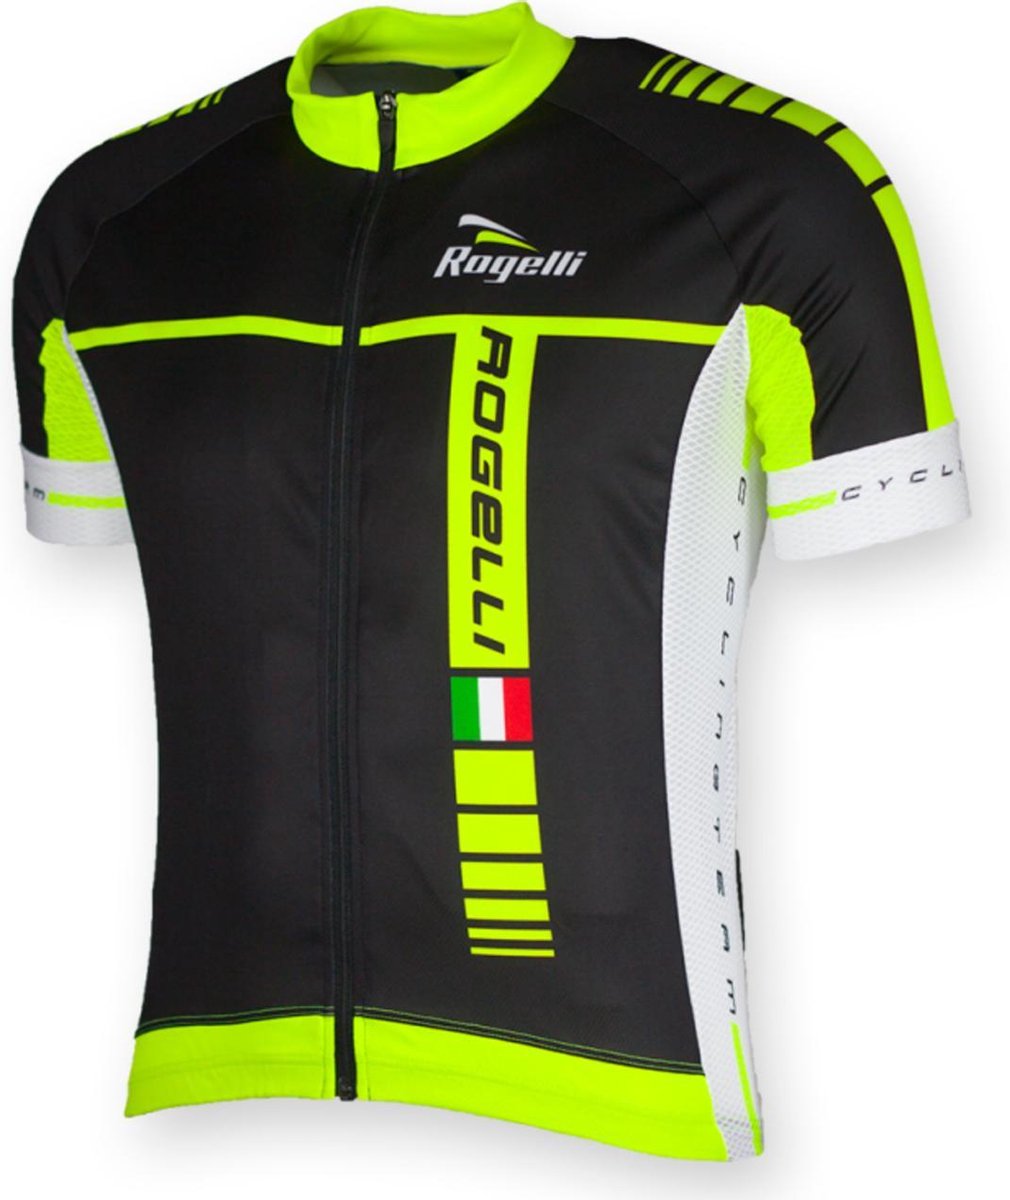 Rogelli Umbria wielershirt - zwart/geel - Rogelli